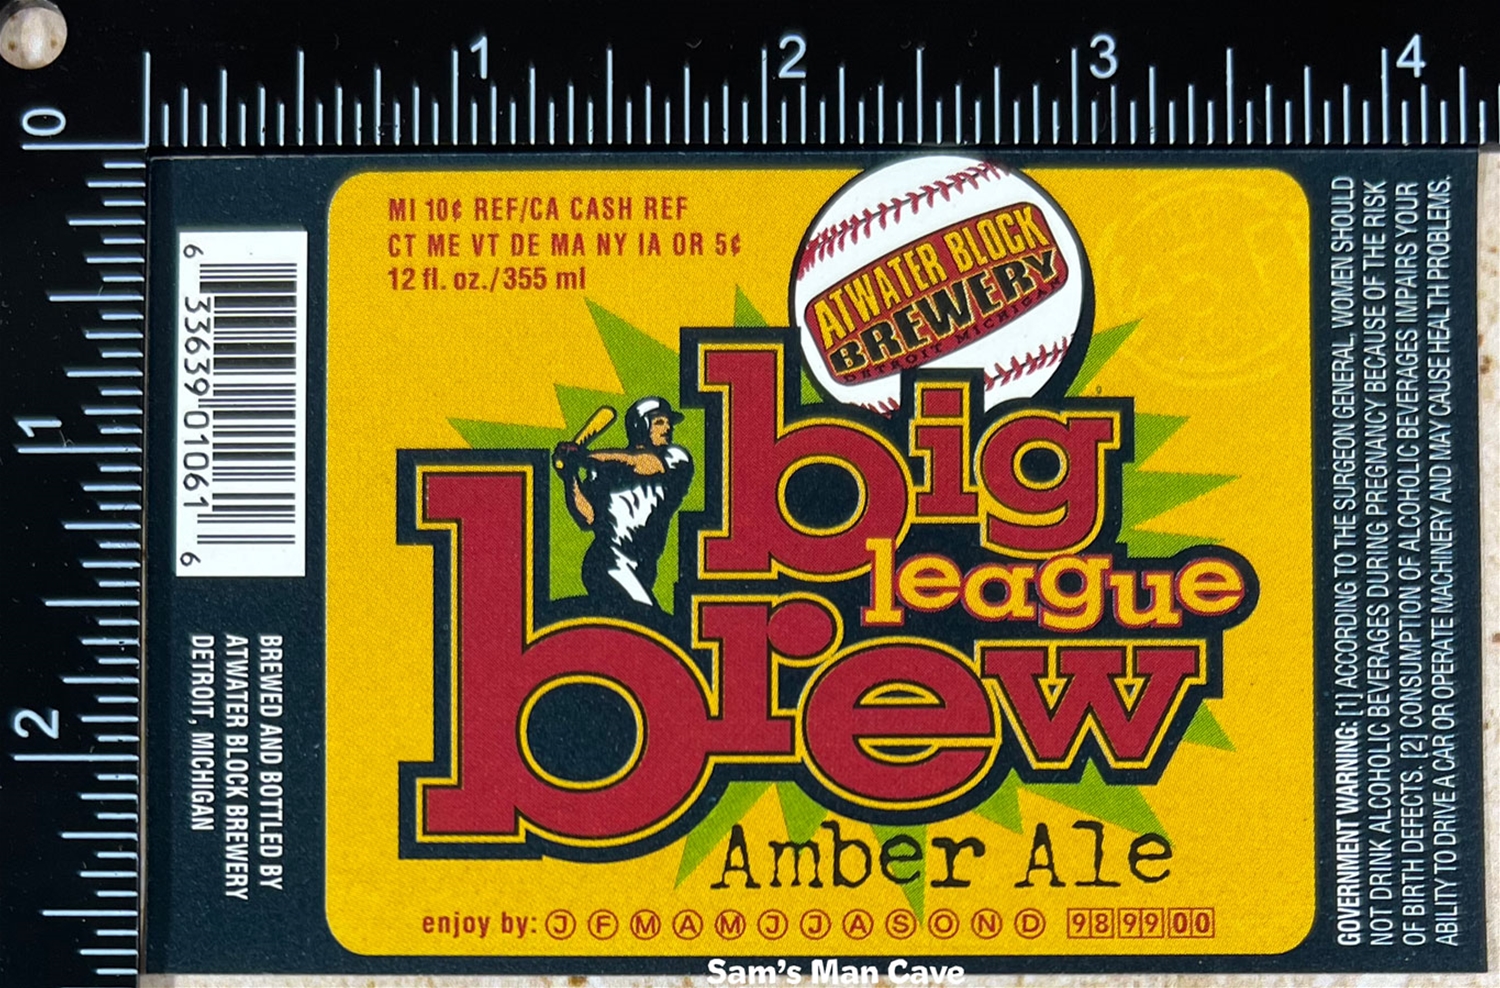 Atwater Block big league brew Label